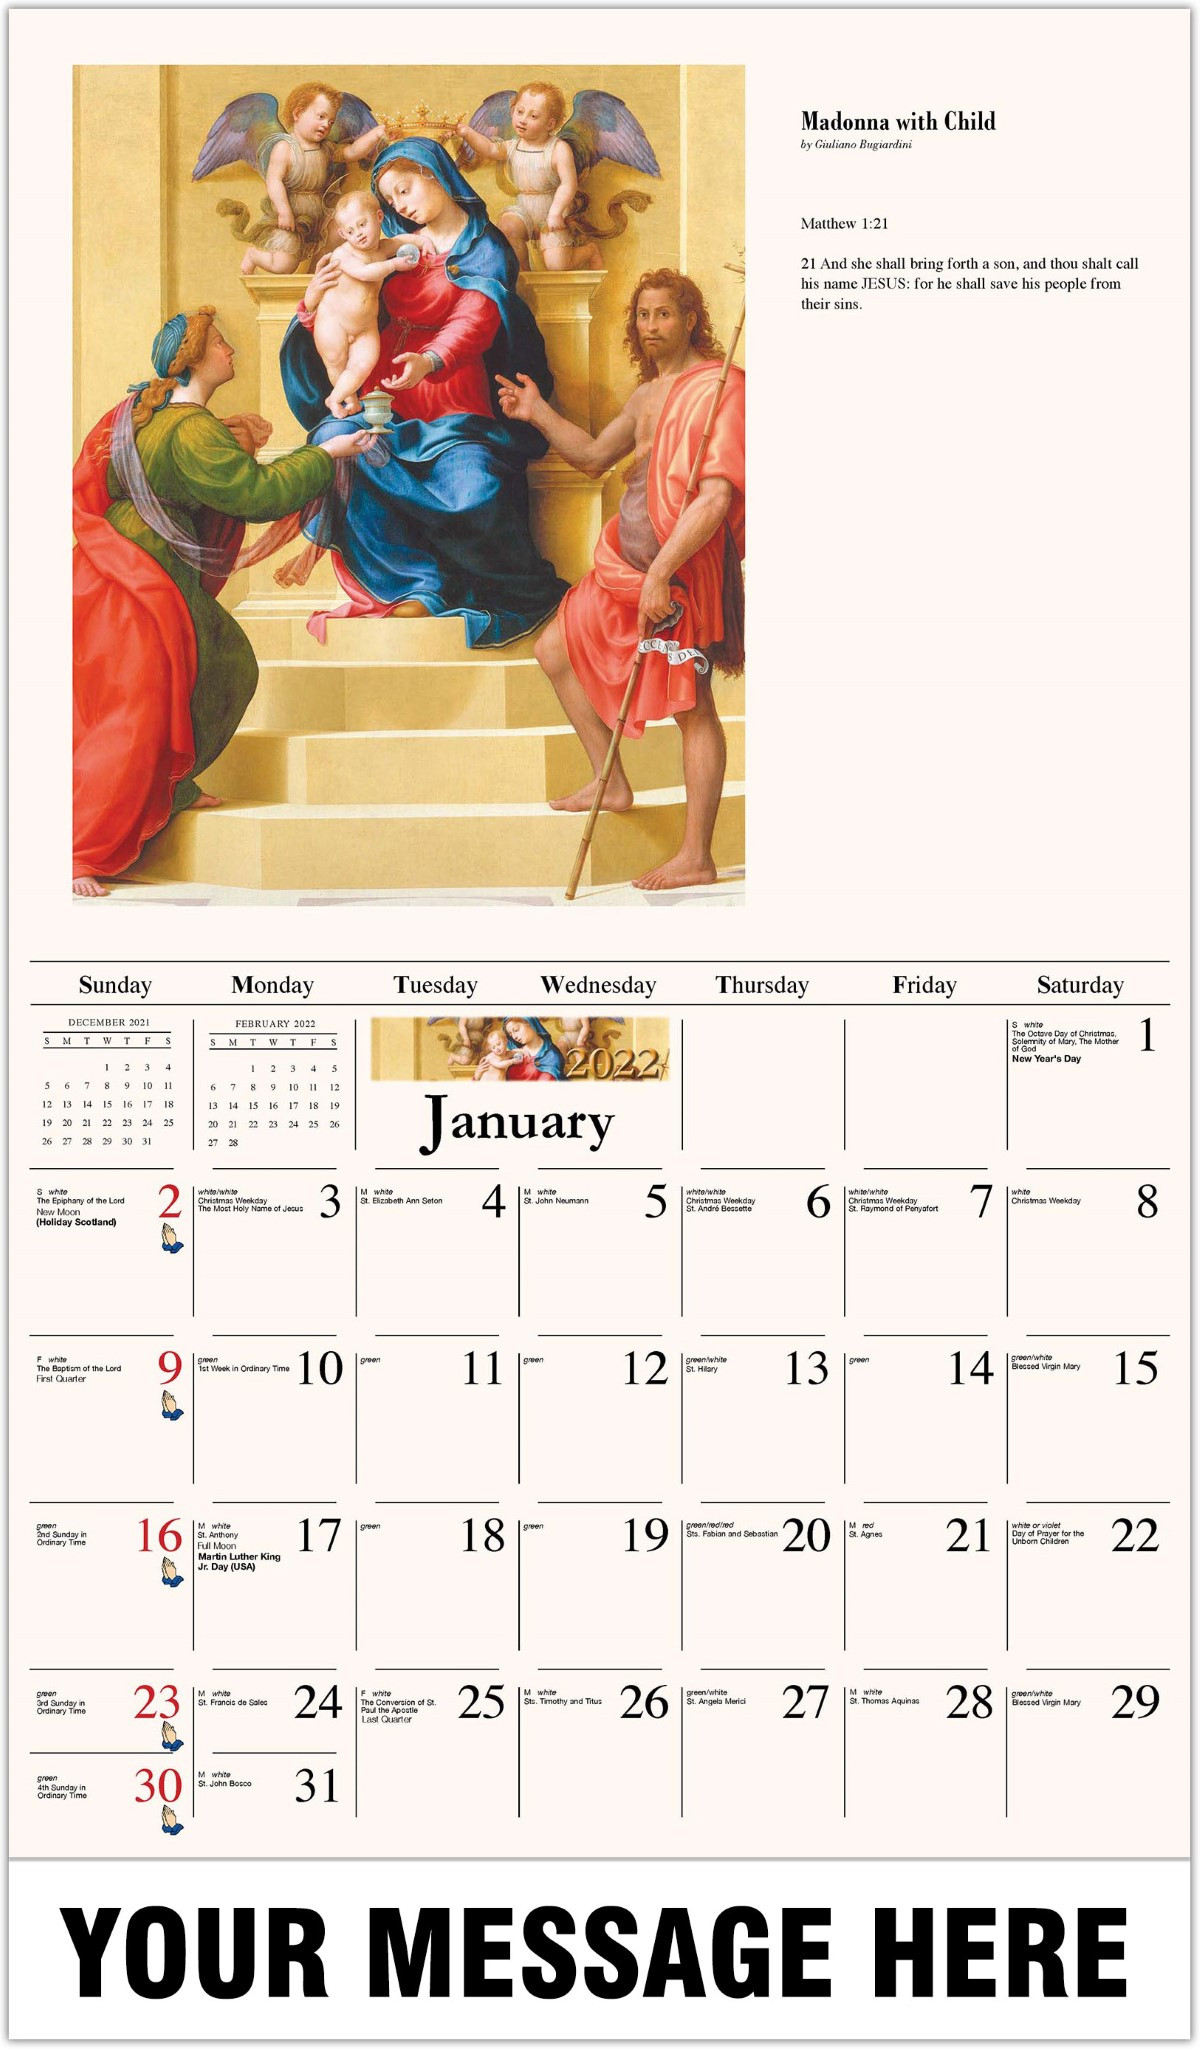 Catch Liturgical Calendar January 2022